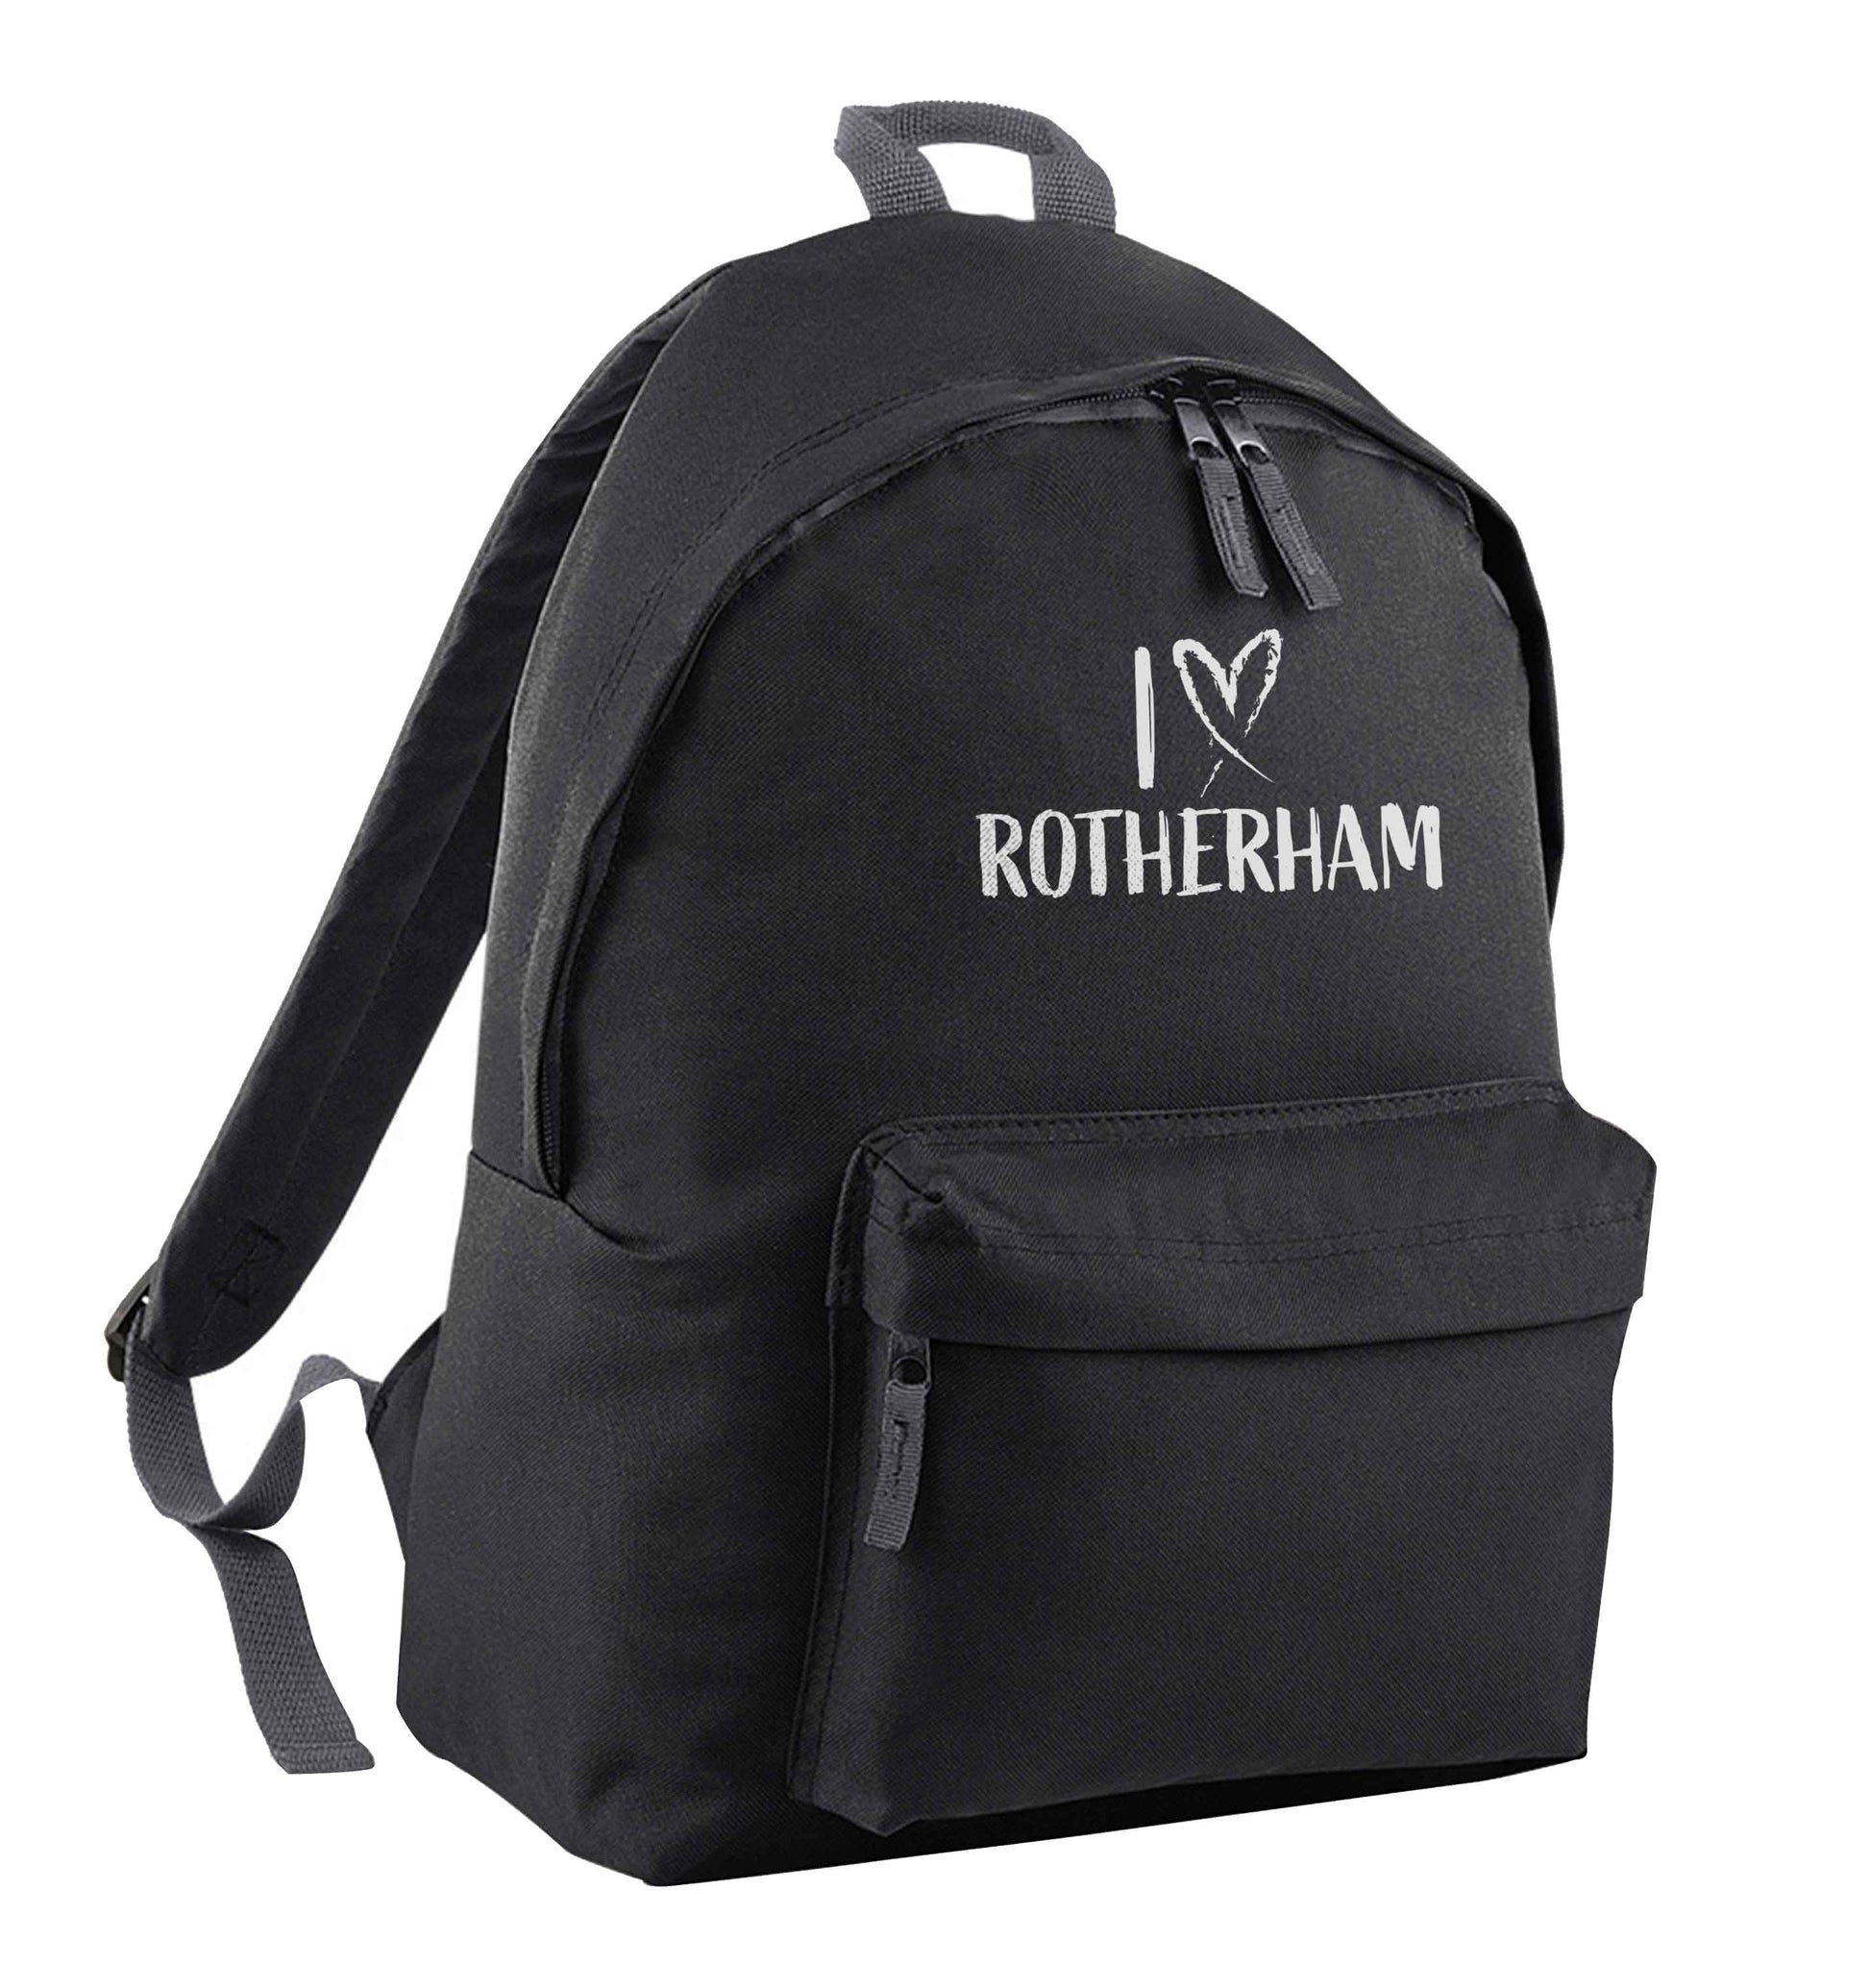 I love Rotherham black children's backpack